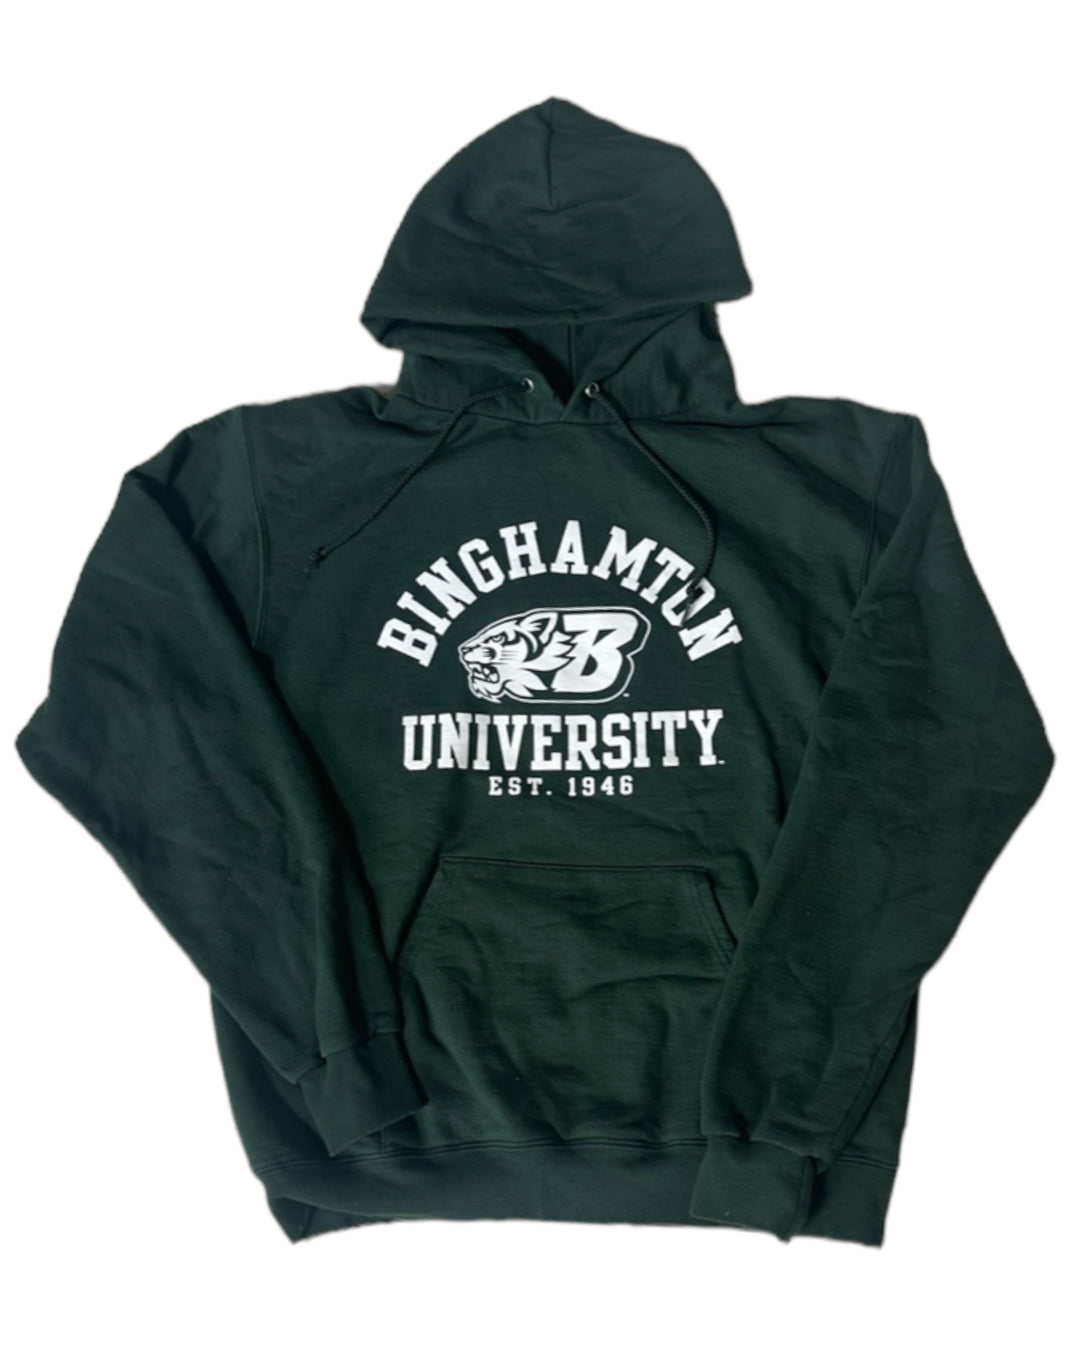 Binghamton Vintage Sweatshirt